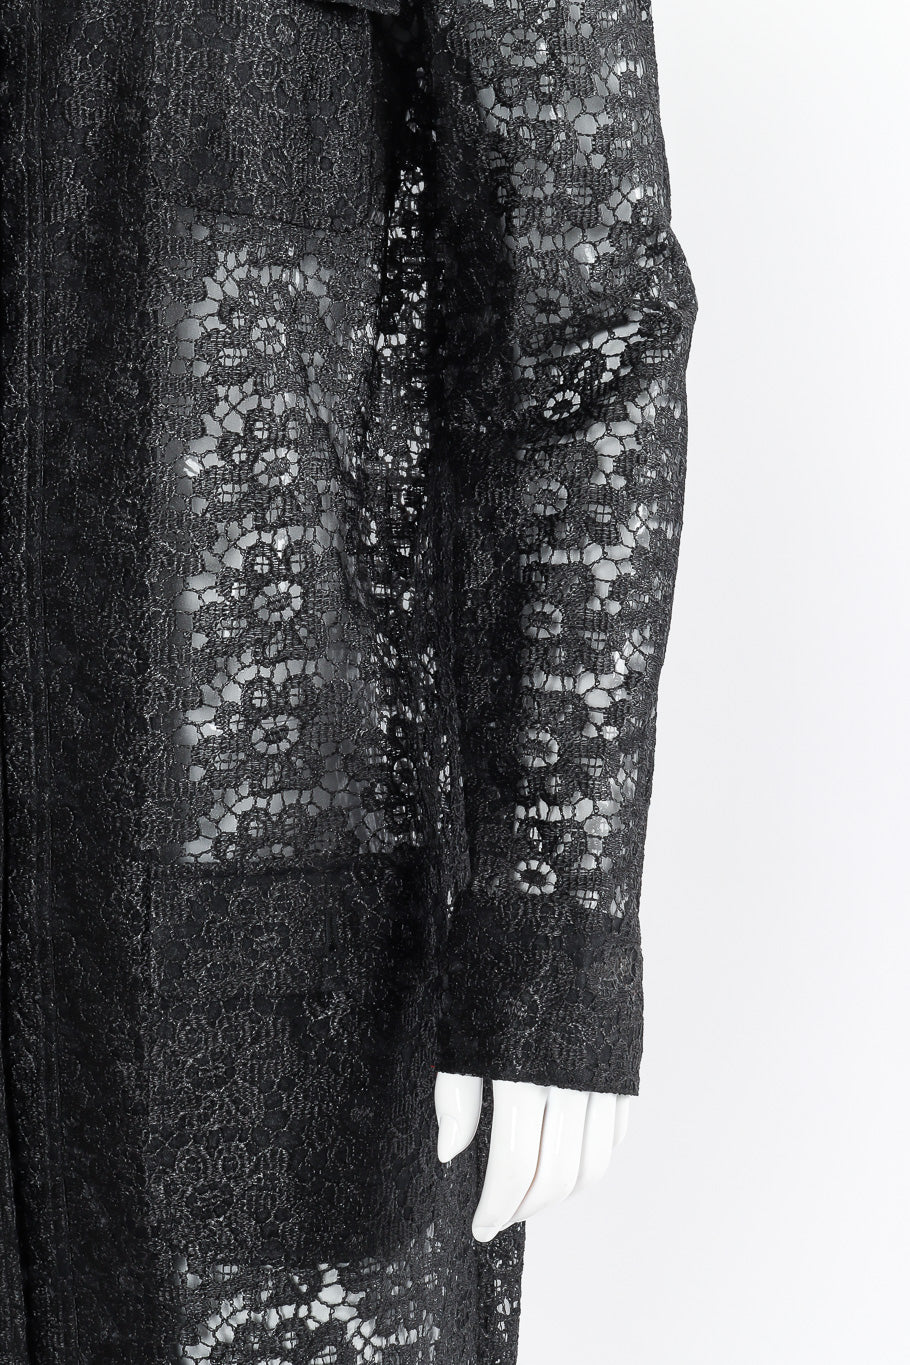 Dolce & Gabbana lace pattern coat fabric details @recessla